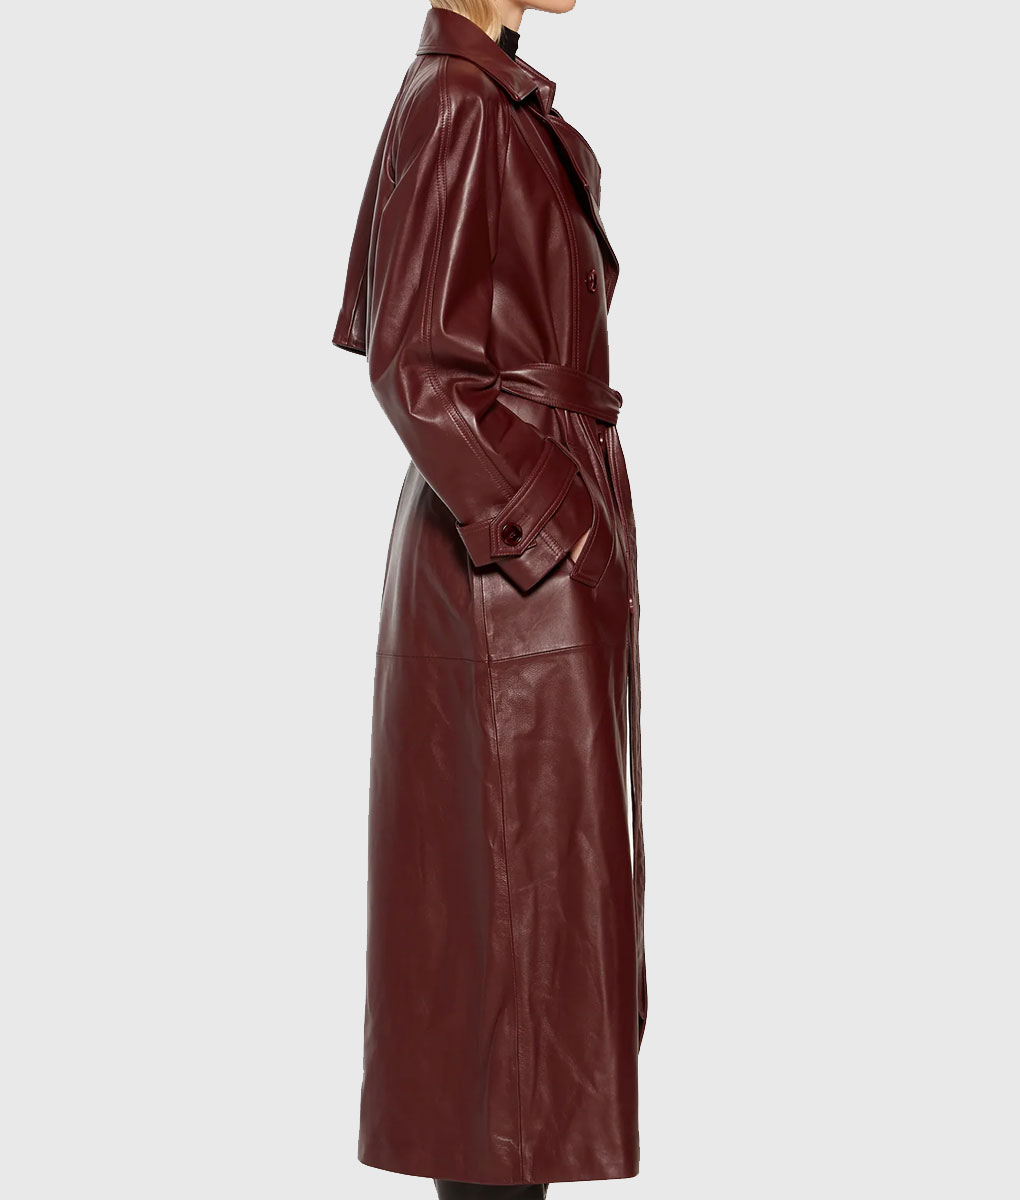 Selena Gomez Knicks Game Maroon Leather Coat (3)